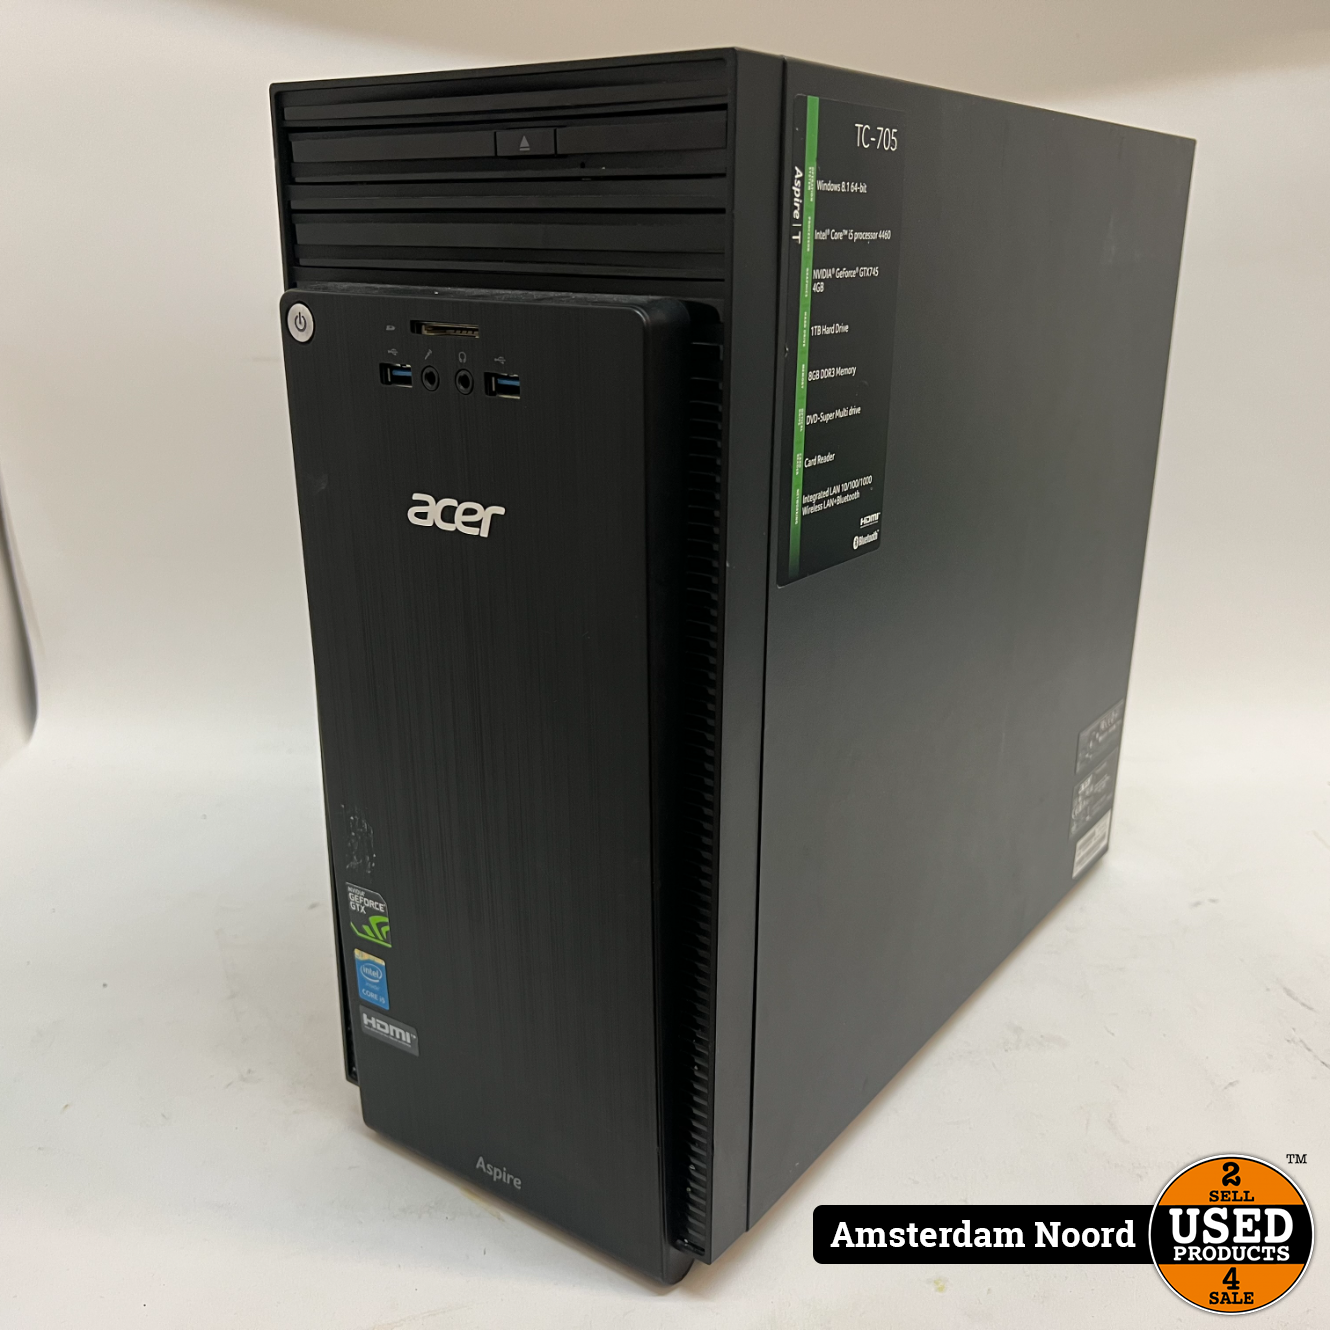 Altijd laser Belastingen Acer Aspire TC-705 Desktop PC - i5-4460/8GB/1TB/GTX745/W10 - Used Products  Amsterdam Noord